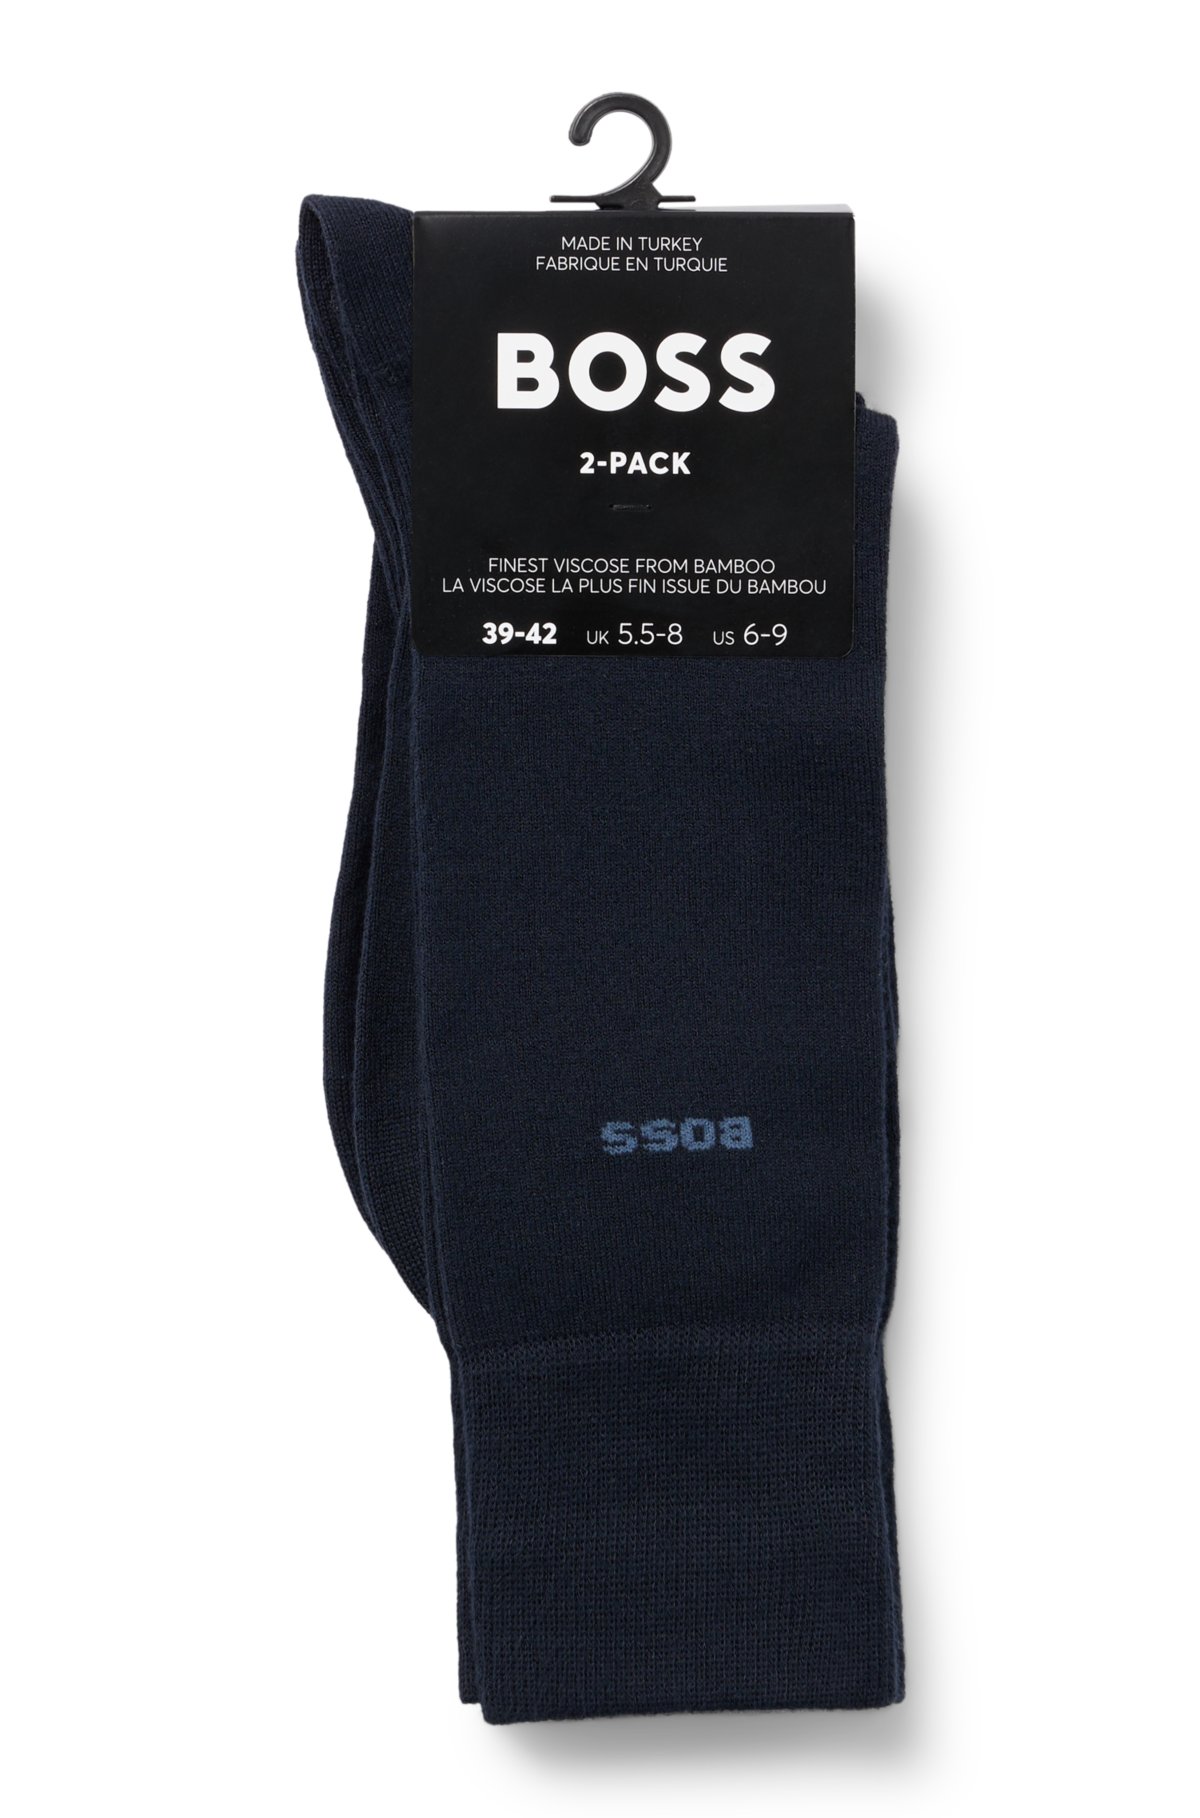 stretch Two-pack in socks BOSS regular-length of - yarns